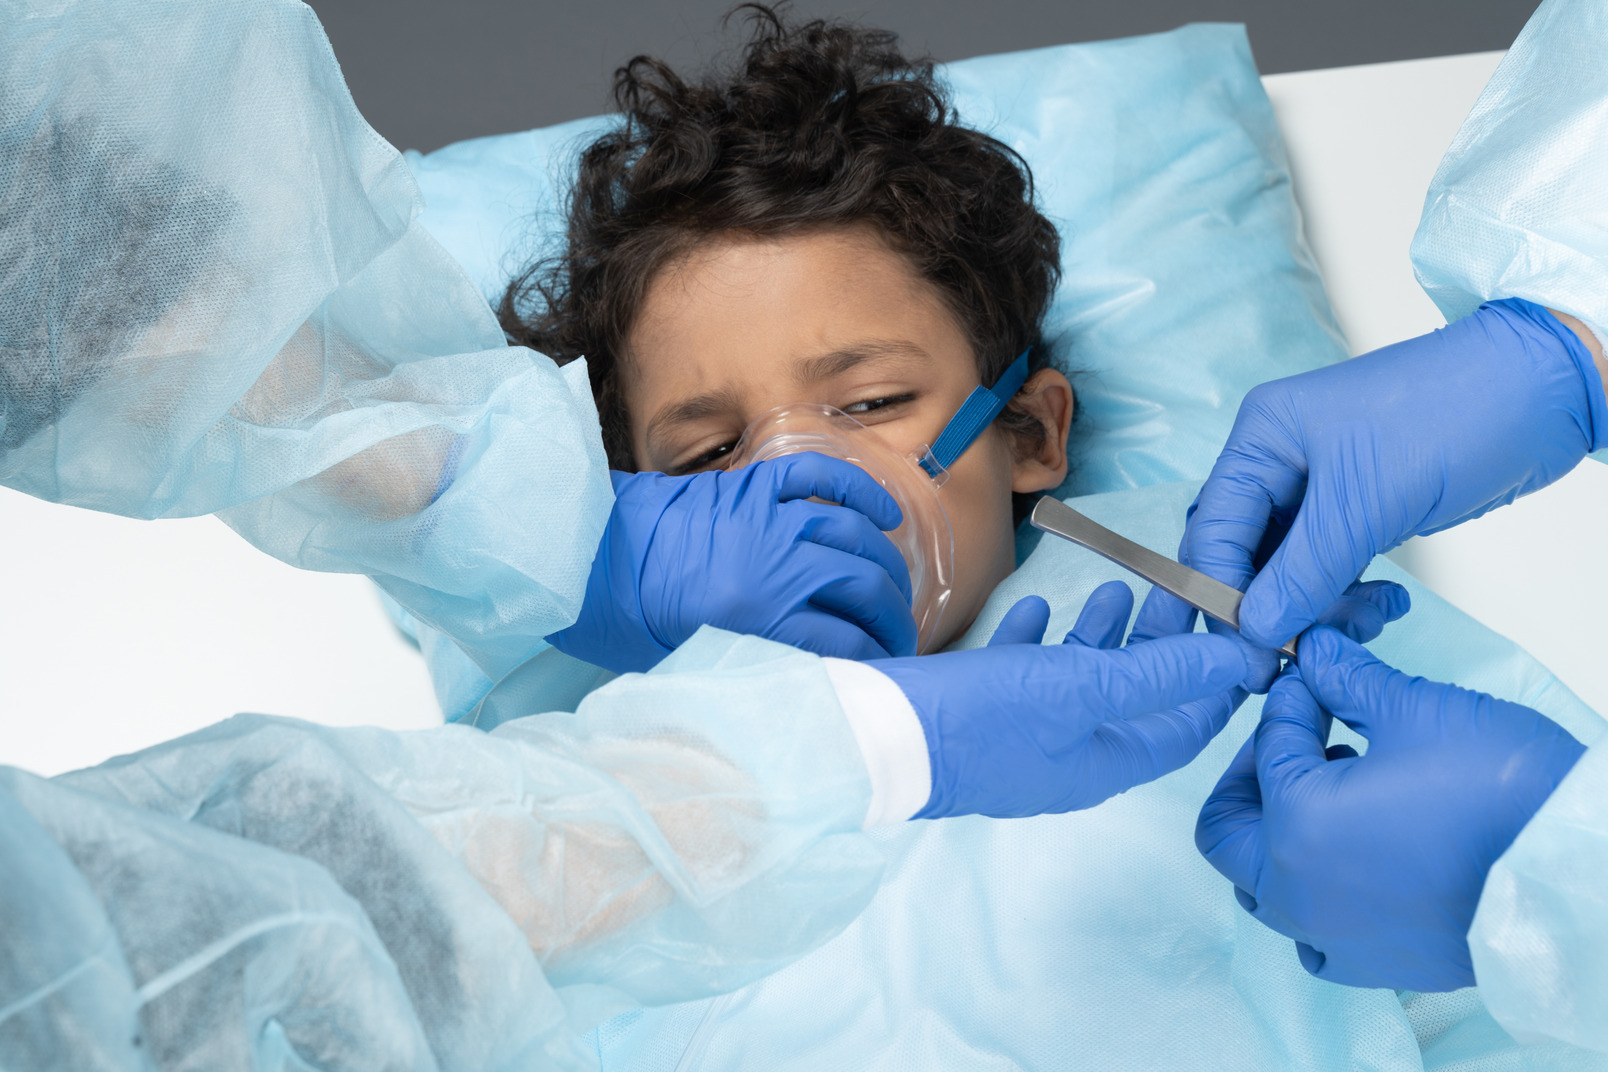 Surgeon operating on child